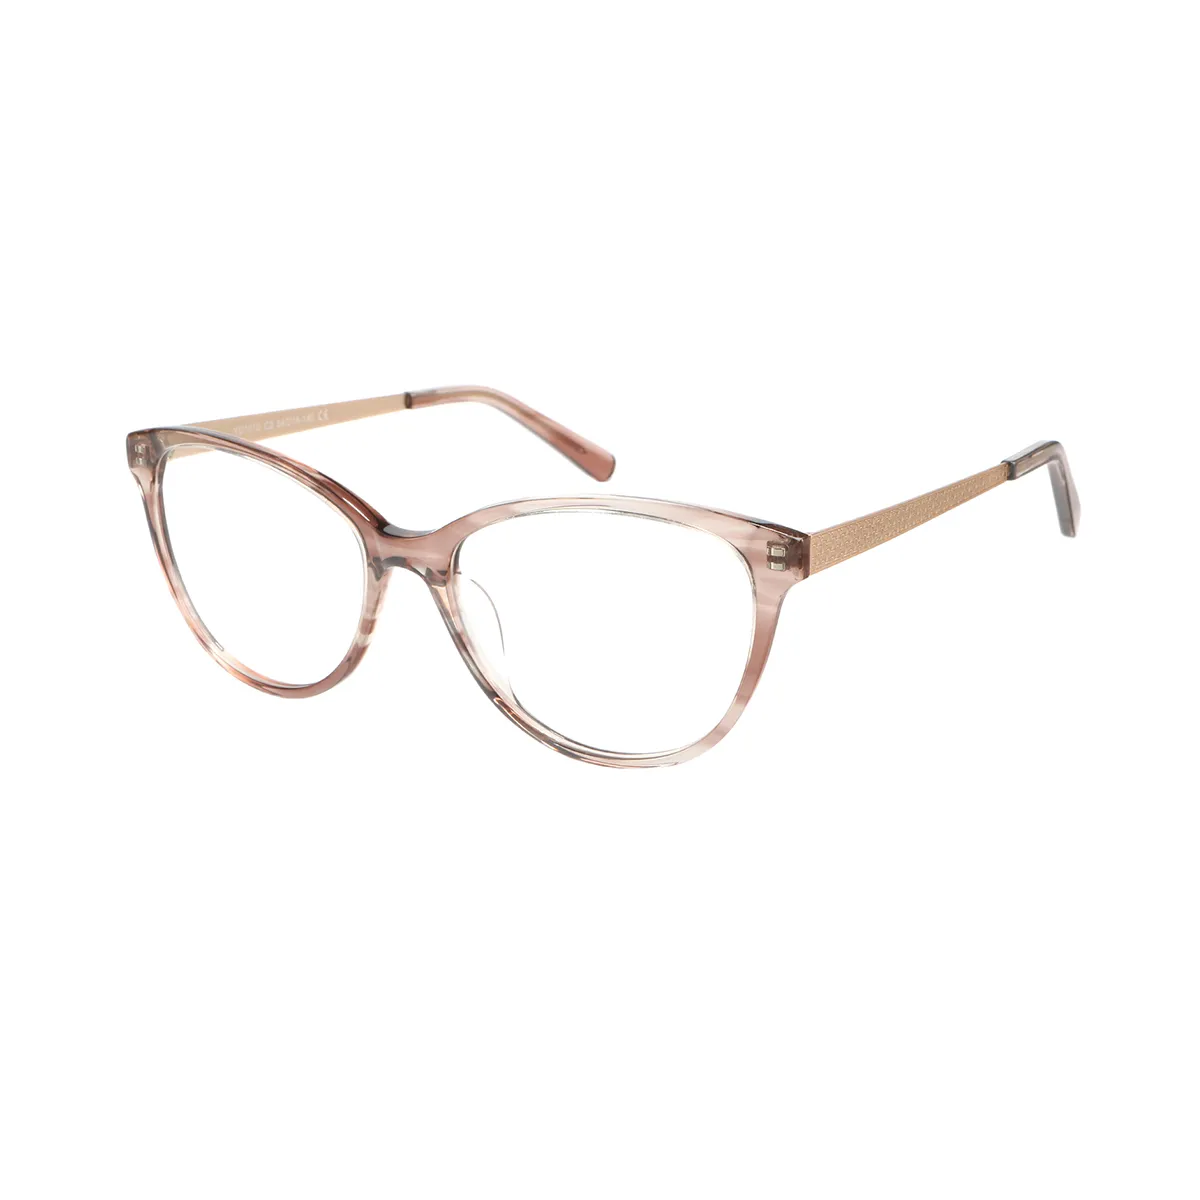 Marjorie - Oval Brown Glasses for Women